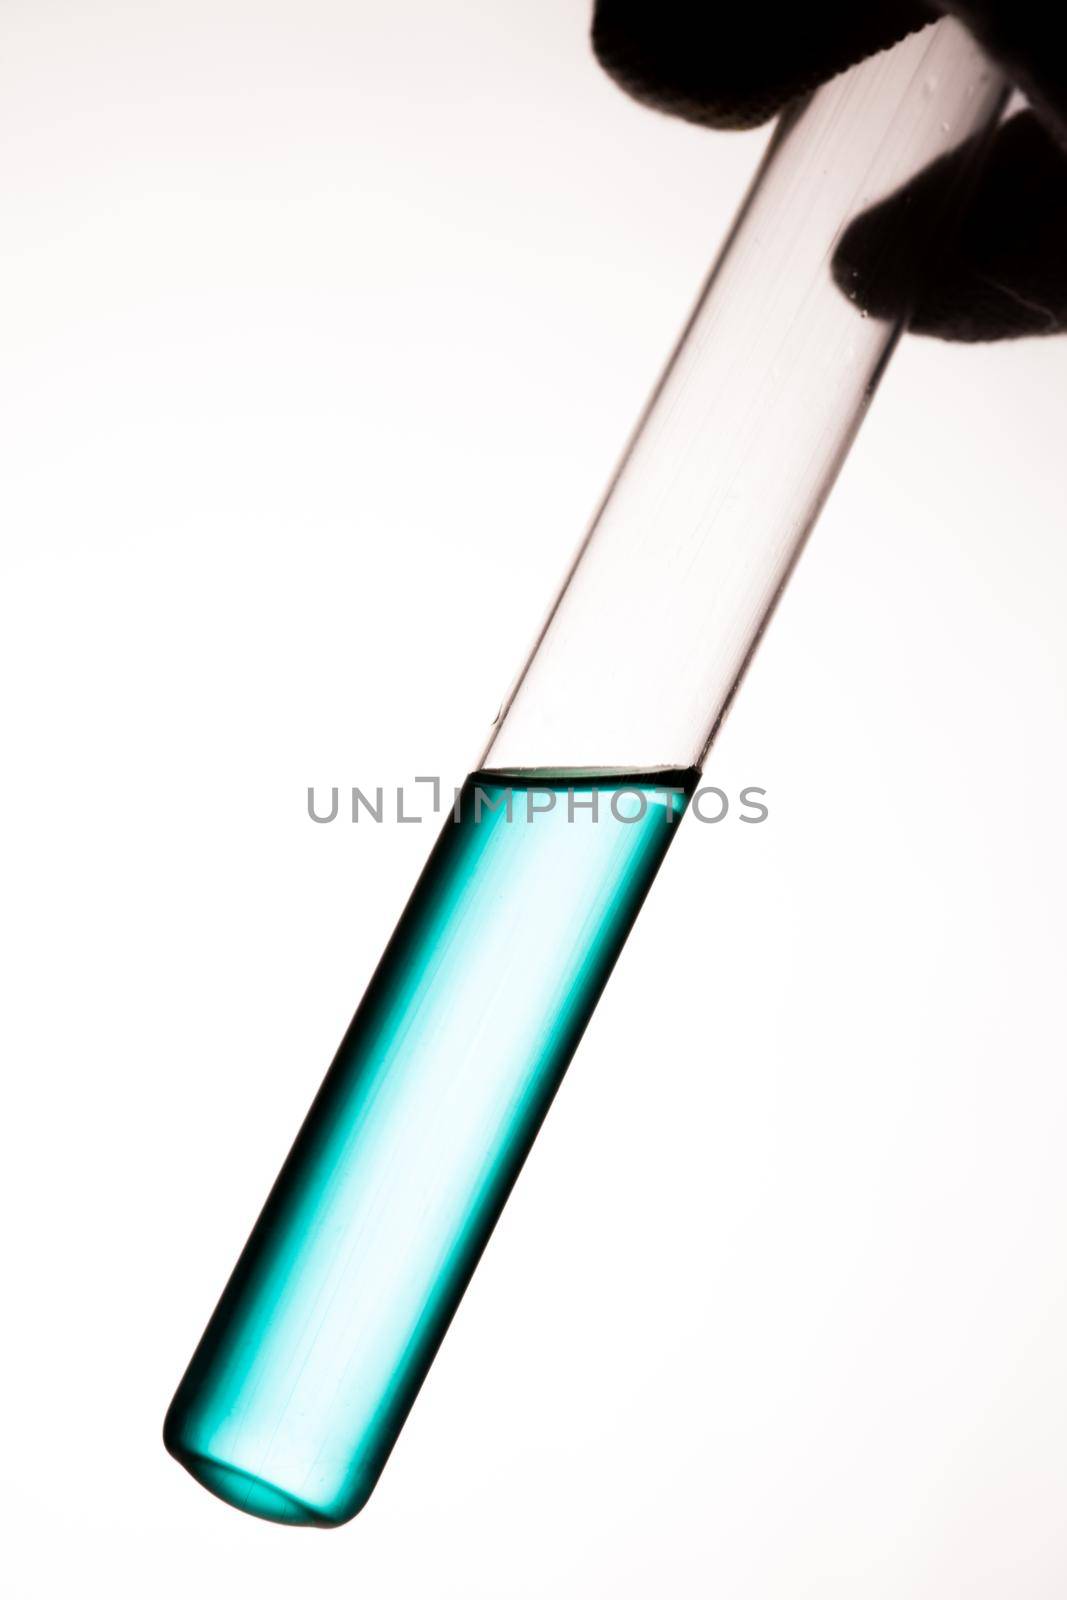 Laboratory glass tube by oksix